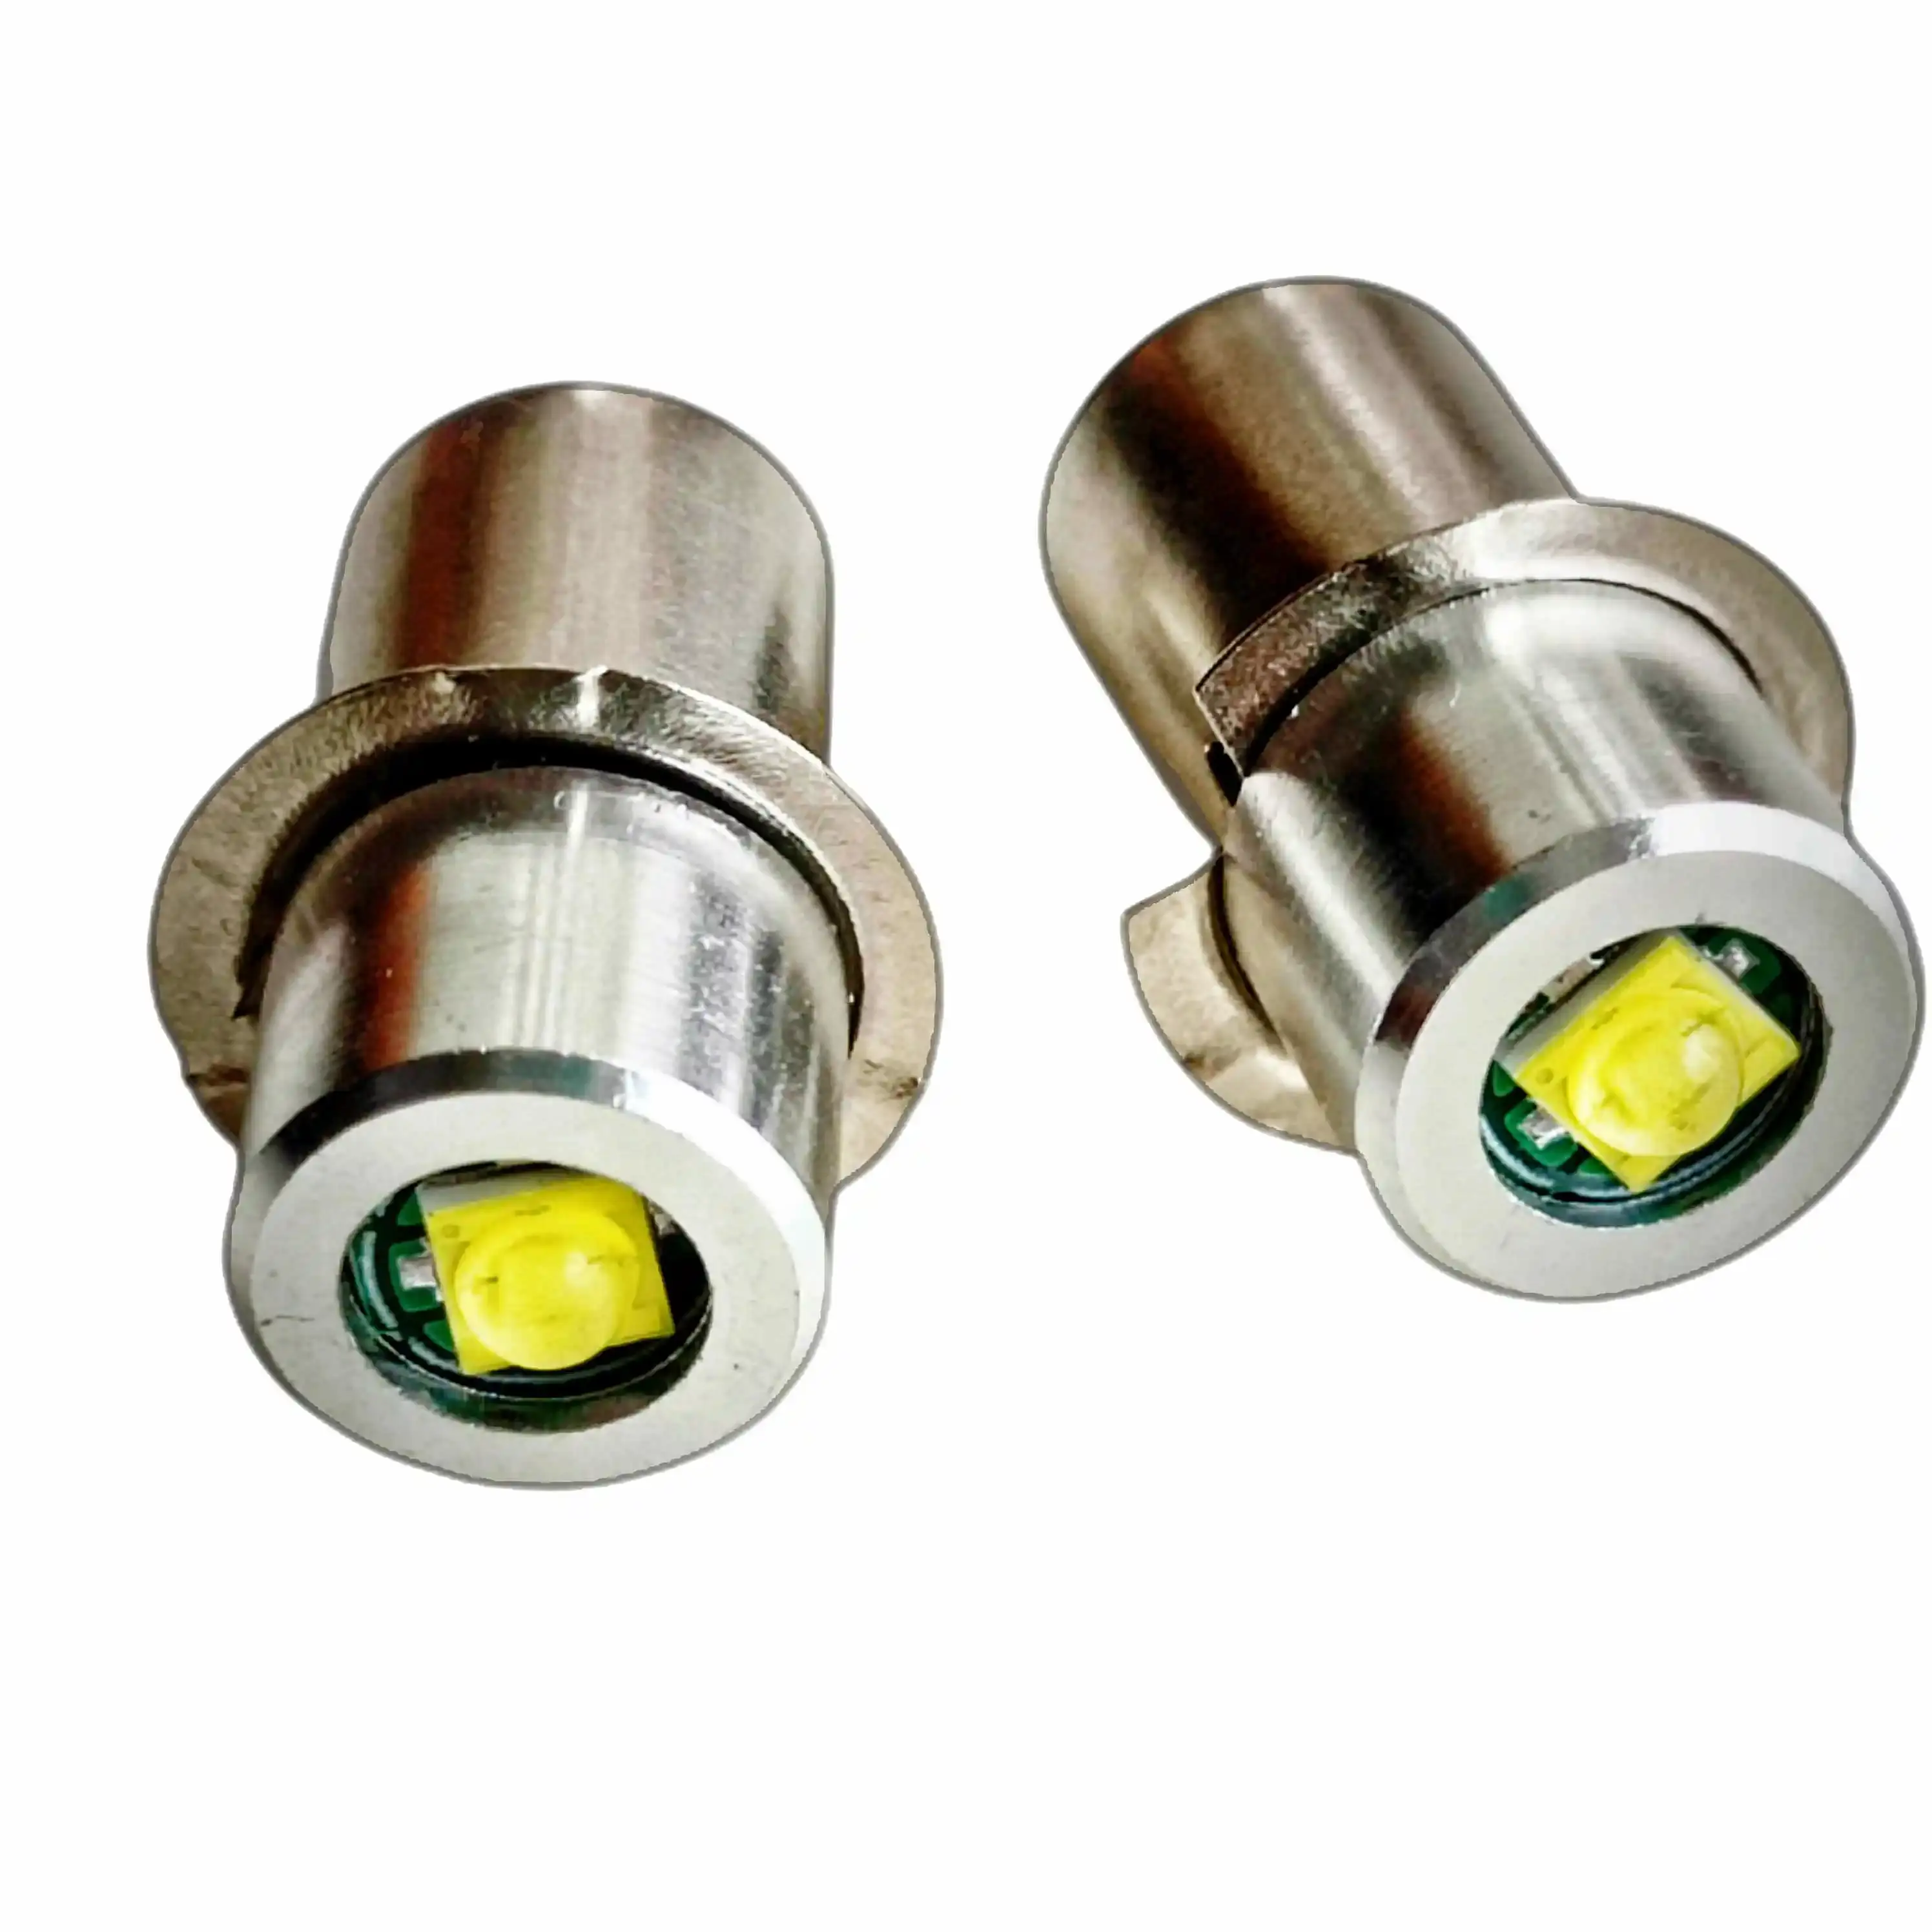 P13.5S Mag Light LED Ampoule 3-16 C & D Cellules Maglite Torche Lampe de poche LED Convertisseur 3V 4.5V 6V 9V 12V 18V 24V Blanc